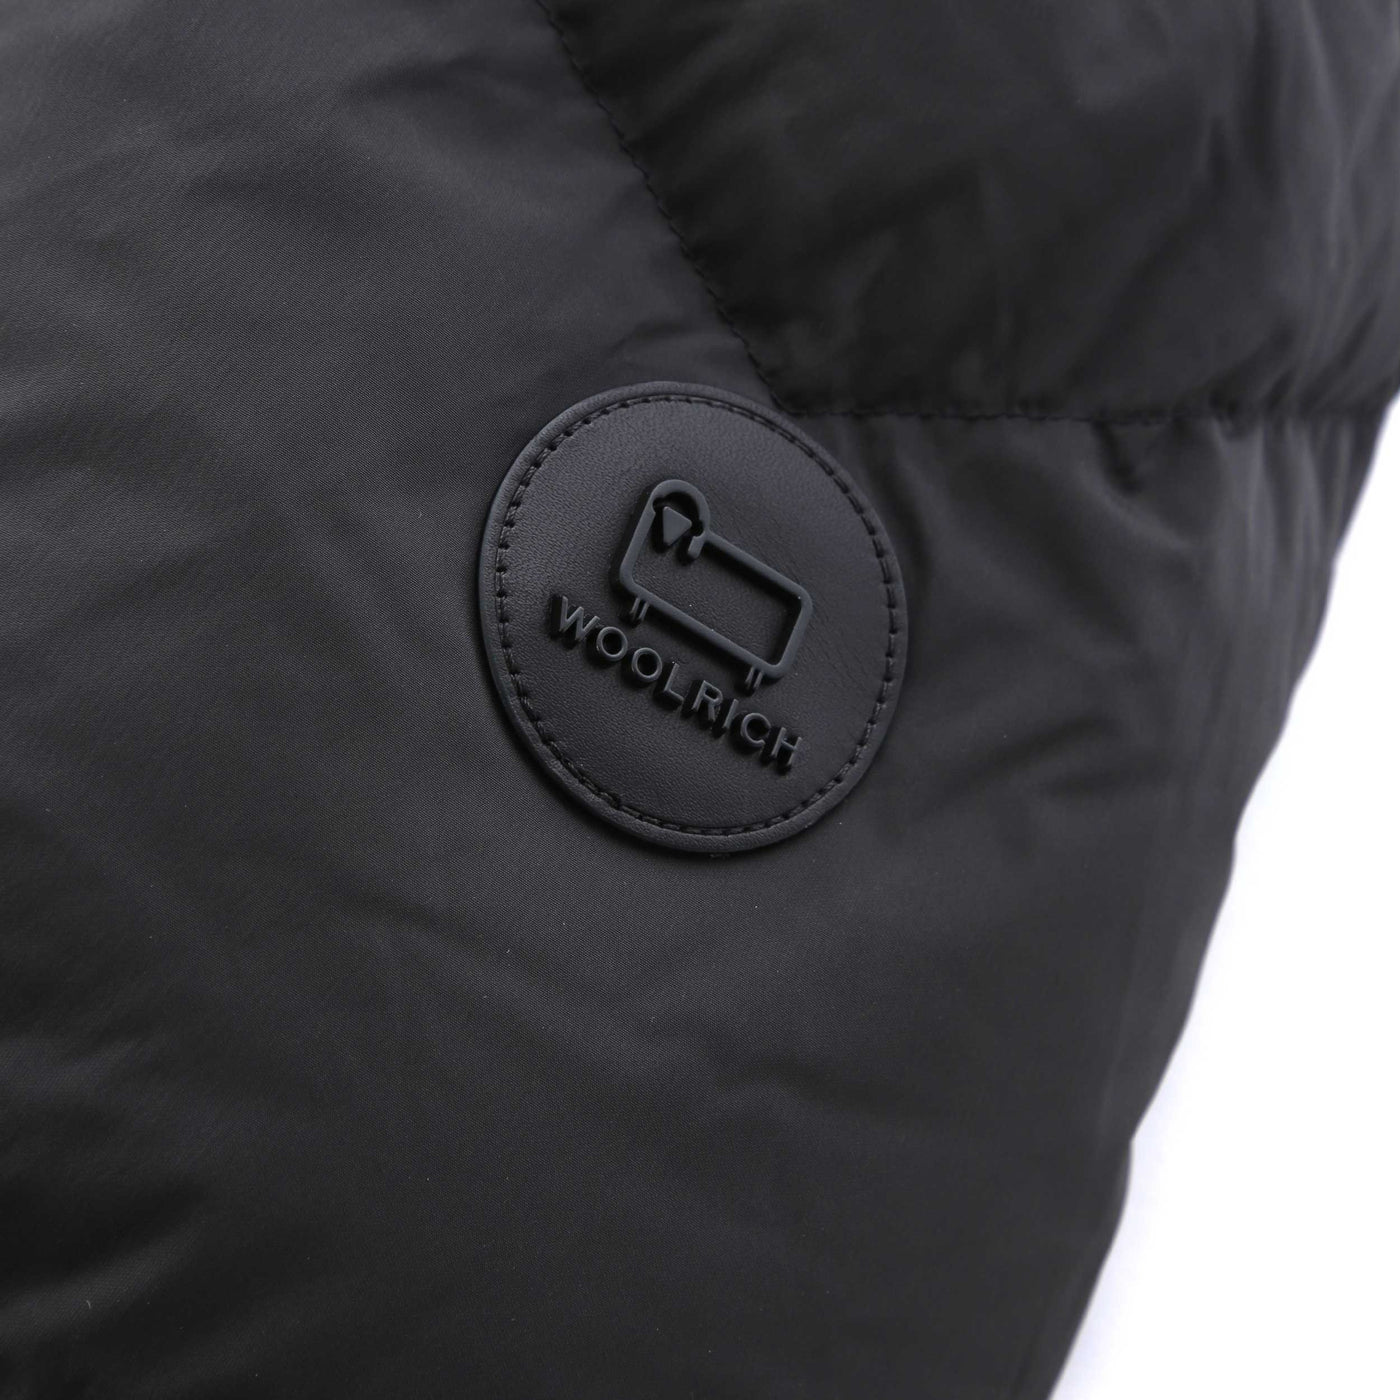 Woolrich Premium Down Jacket in Black Logo Badge